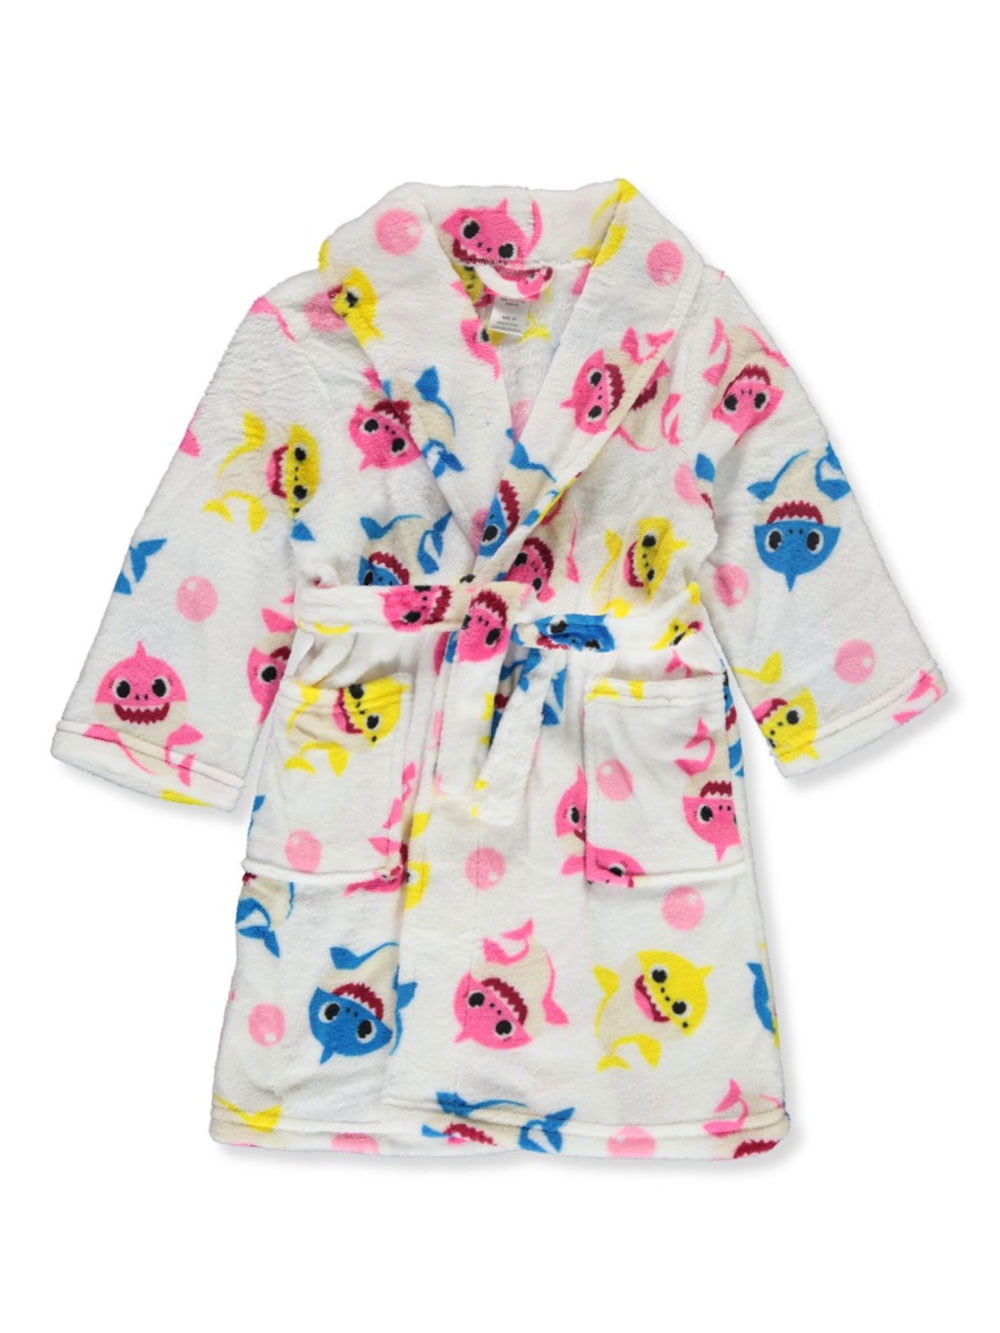 Baby Boys Girls 0-3 Years Bath Towel Shark/Owl Bathrobe Cute Hooded Sleepwear 